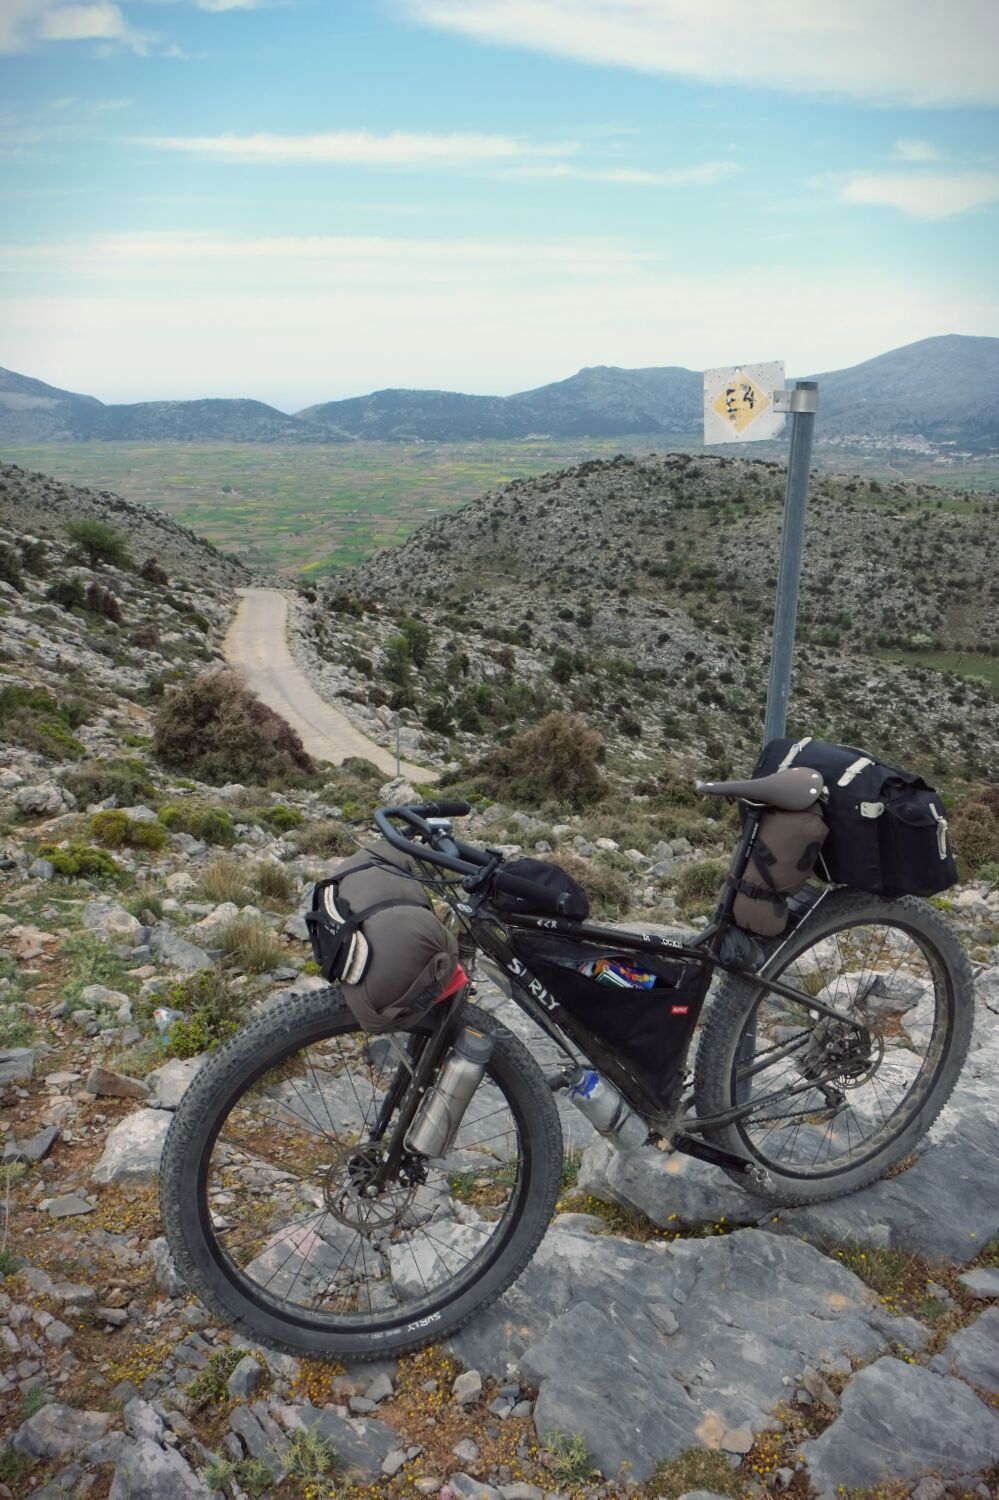 E4 trail marker above the Lasithi Plateau (background)